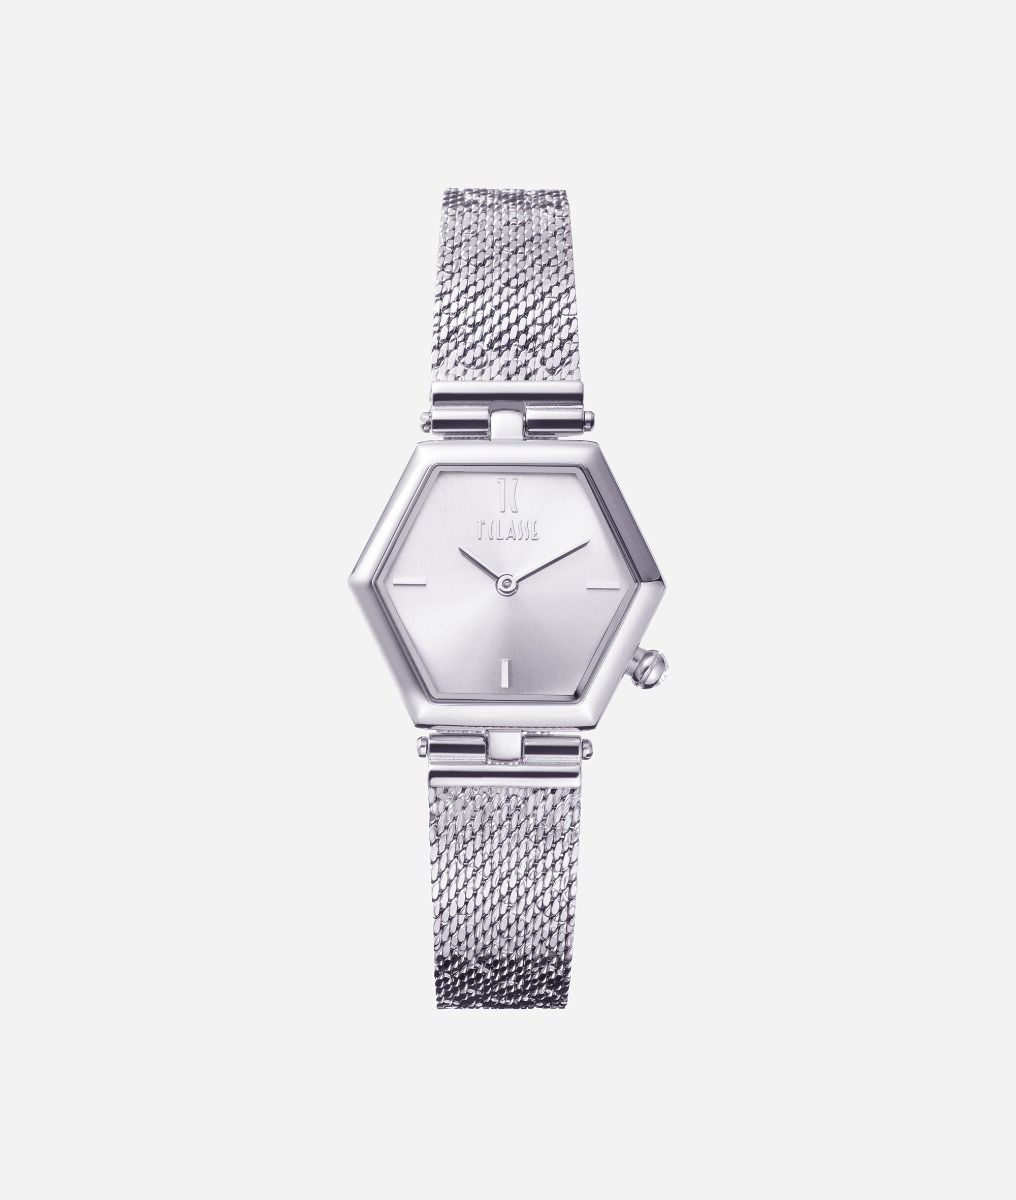 Salina orologio con cinturino in acciacio inossidabile Argento,front